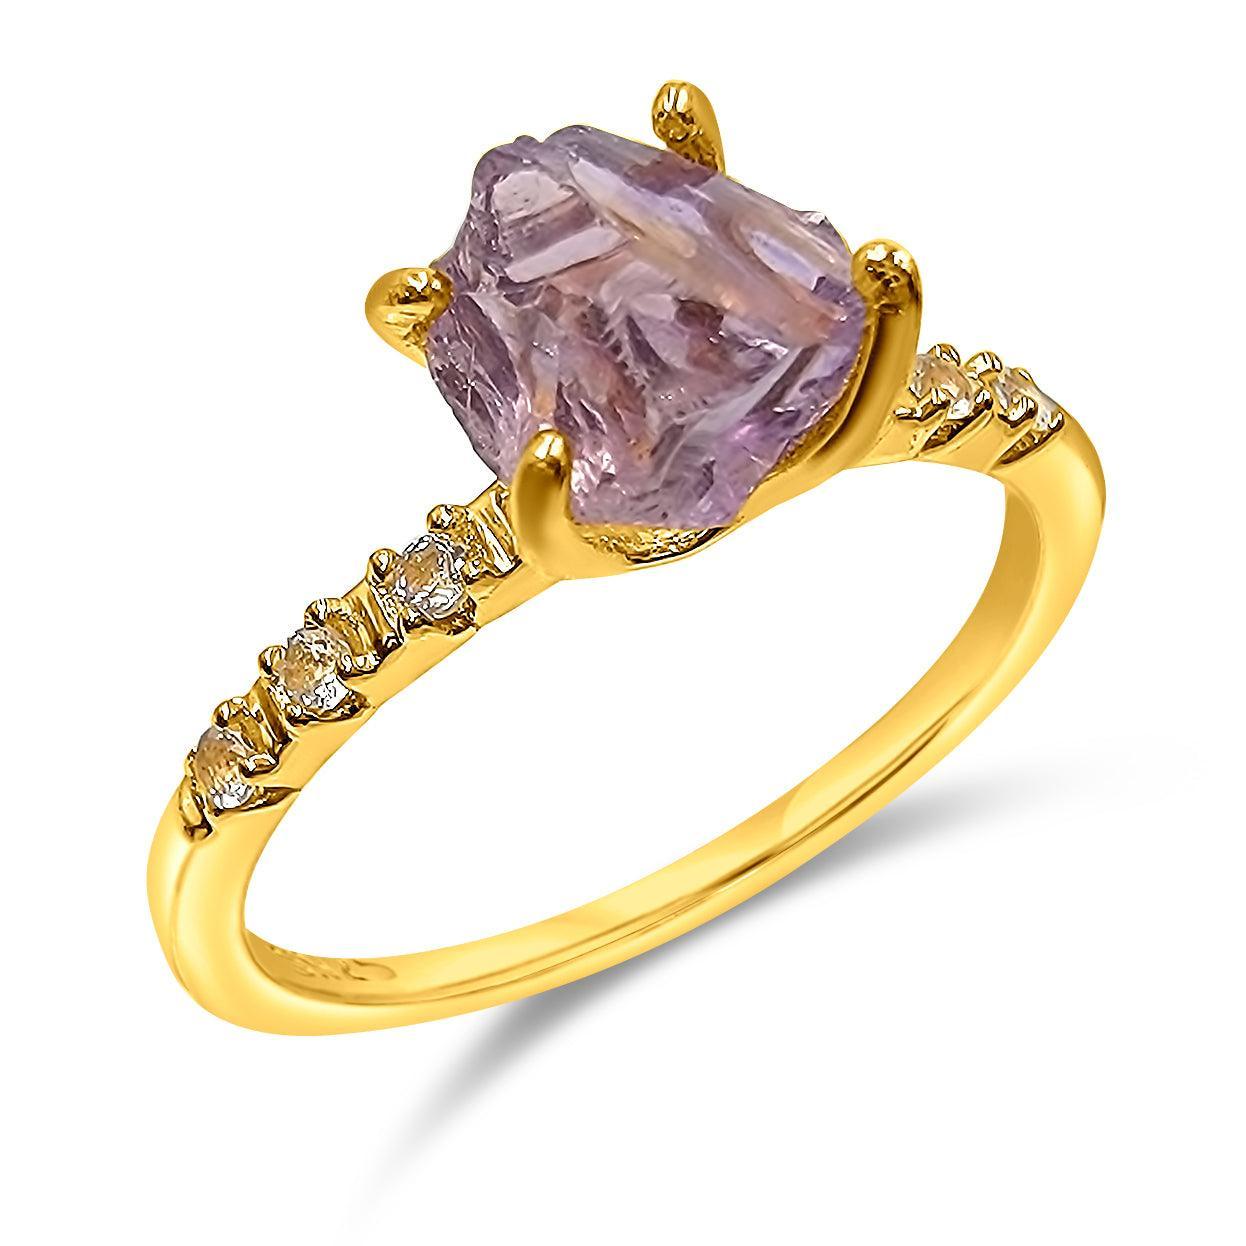 Ametrine Crystal Tiny Ring - Uniquelan Jewelry